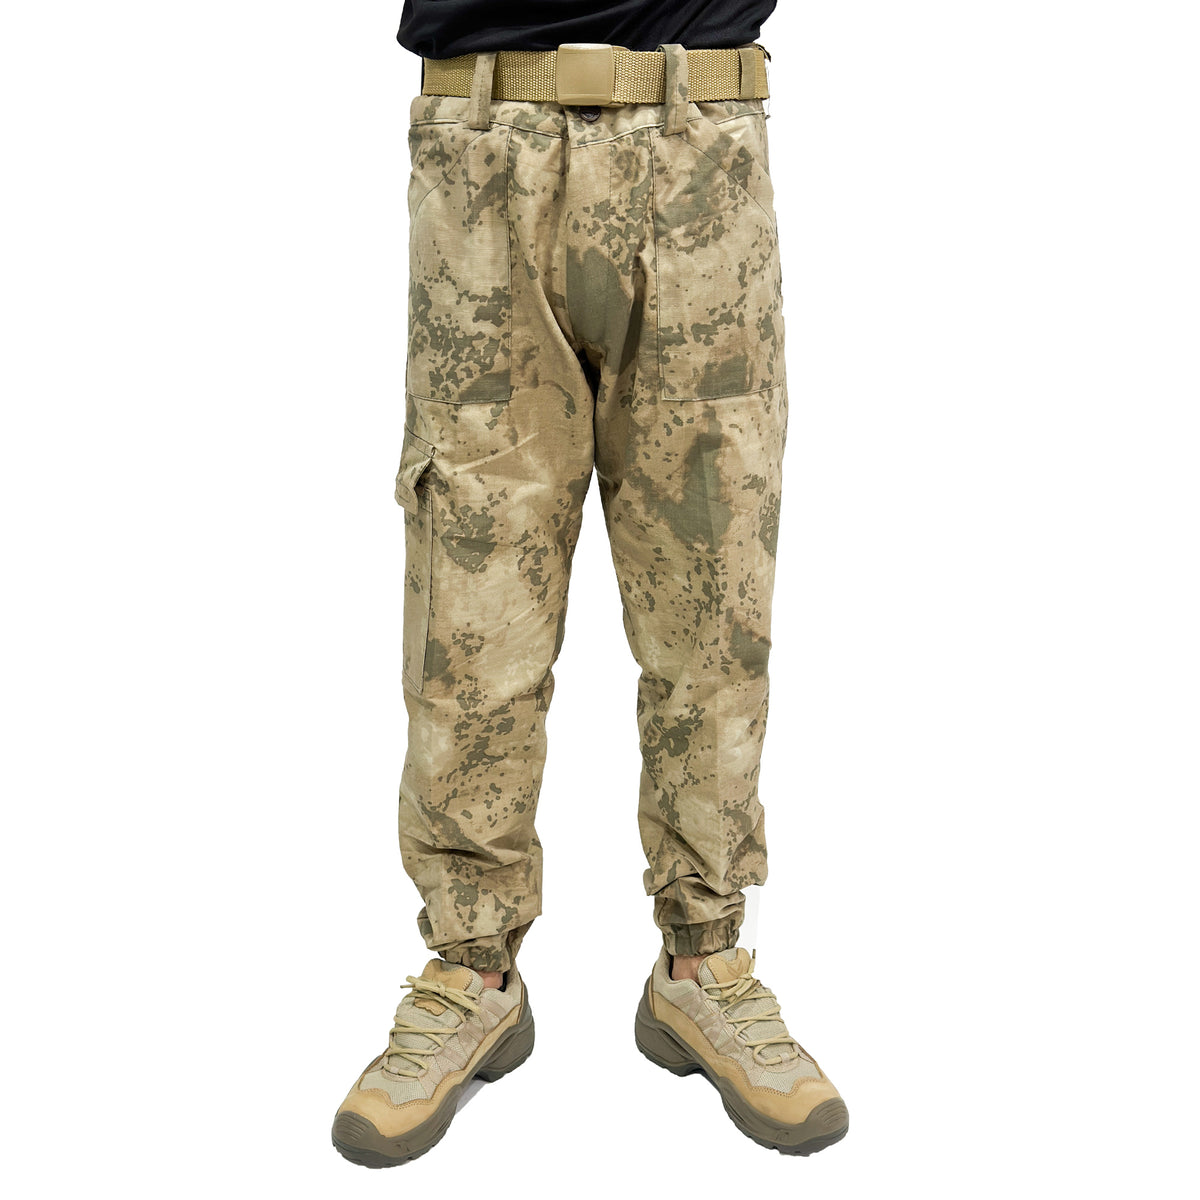 Outdoor Deserton Camouflage Pants